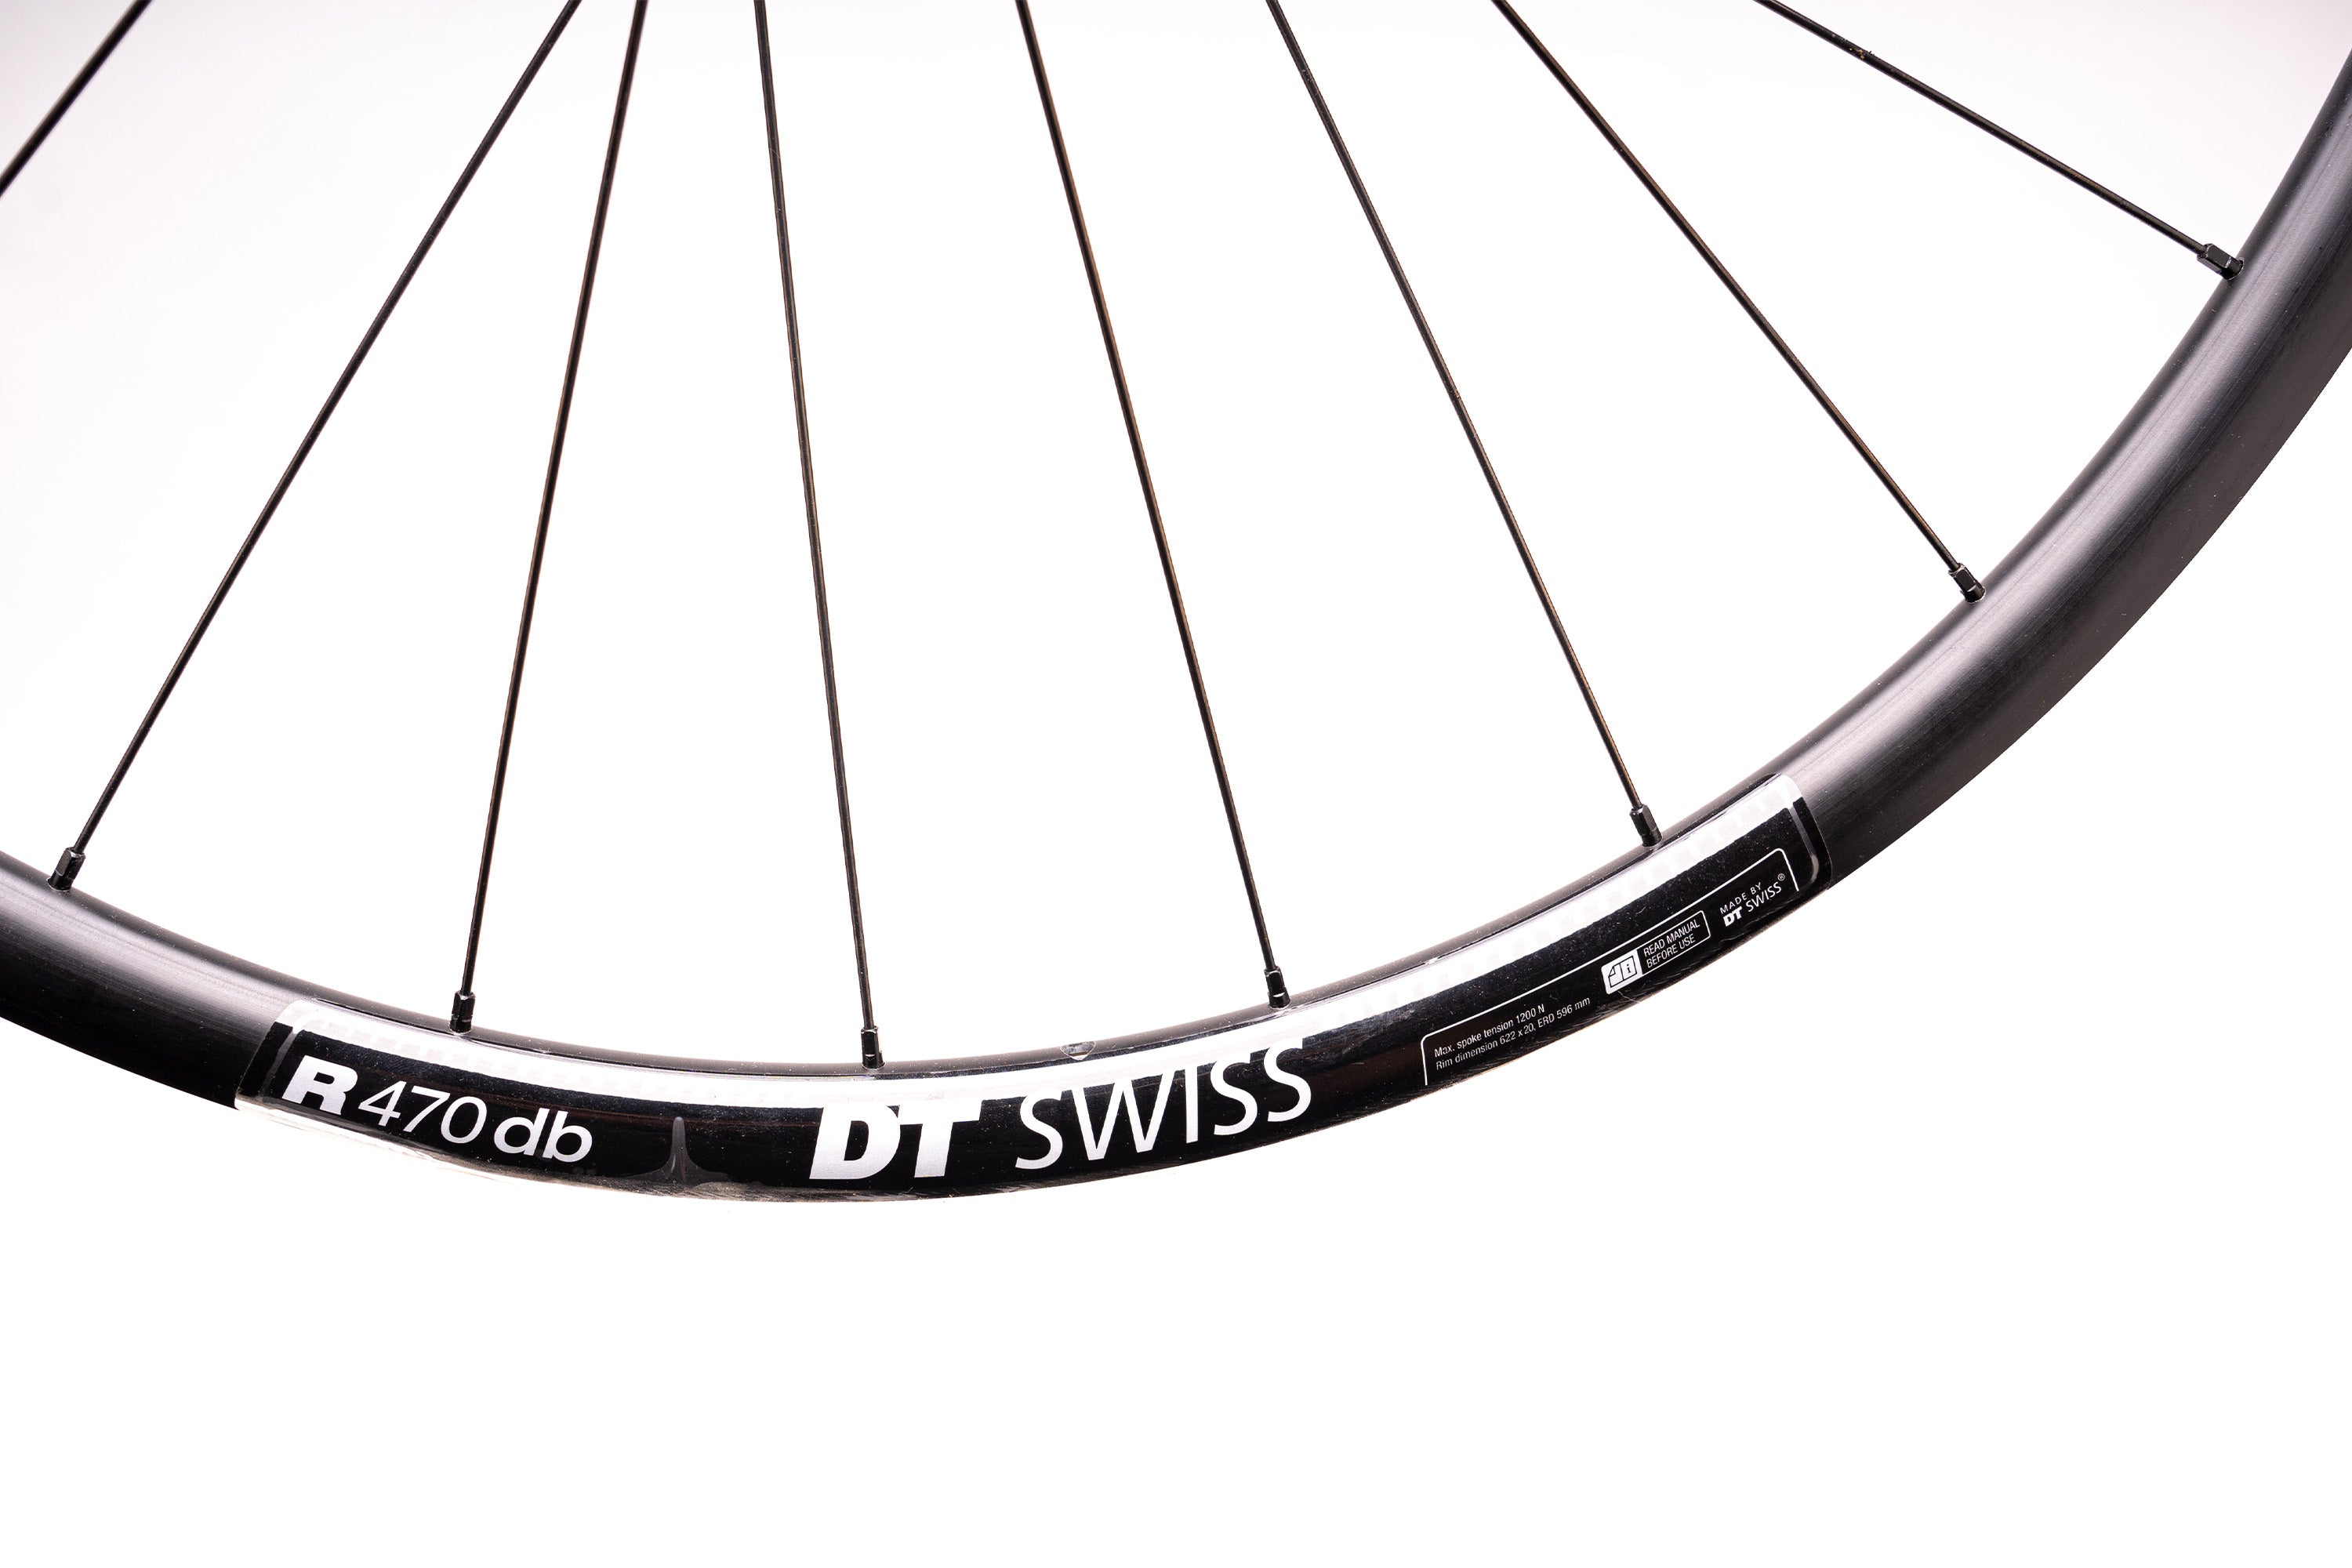 DT Swiss R470 db 700c 12mm Front Disc Wheel – Rock N' Road